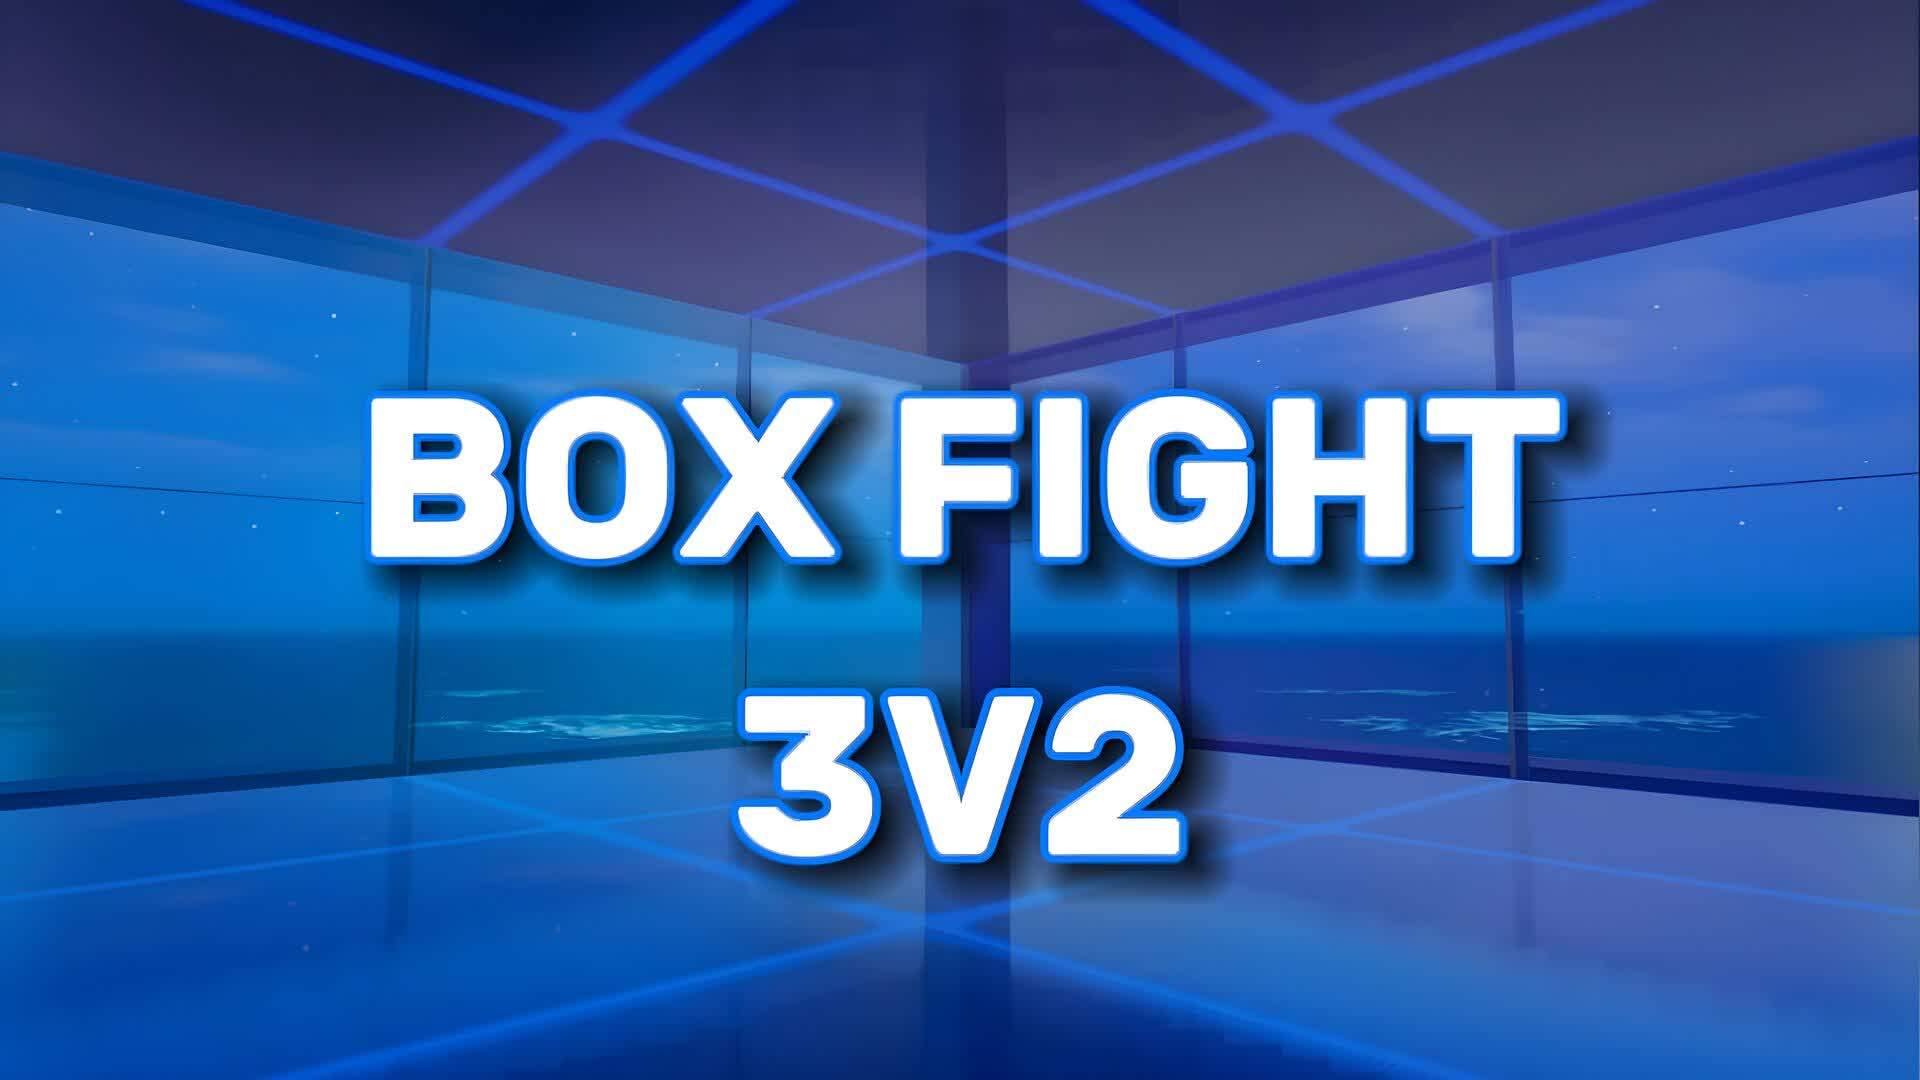 BOX FIGHT 3V2